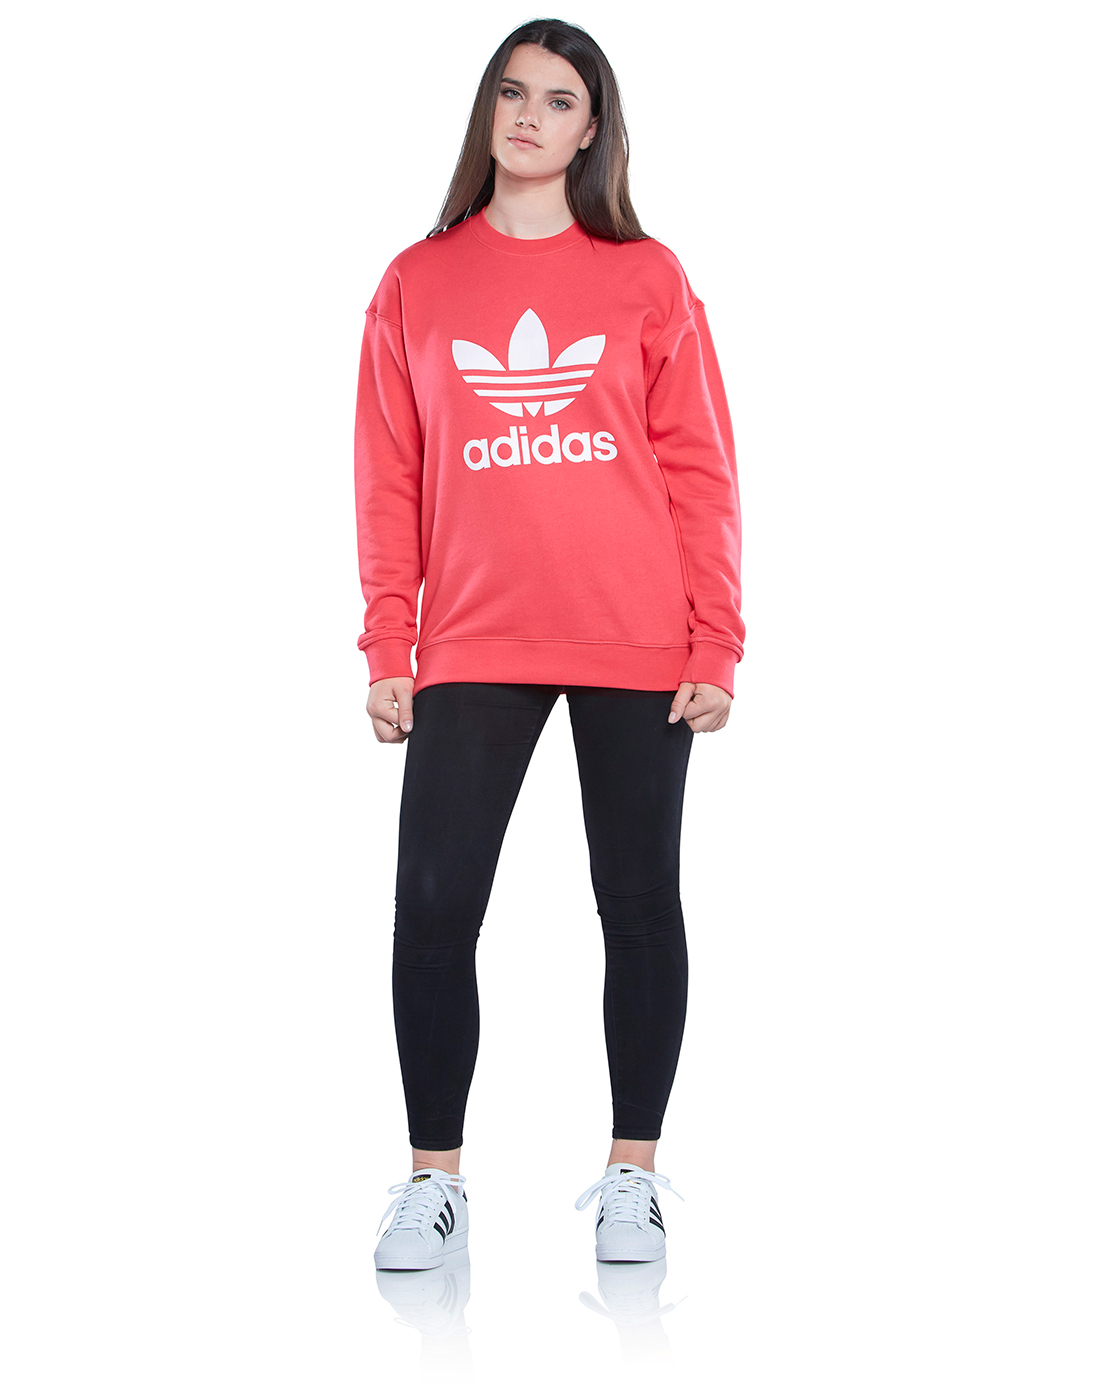 adidas Originals Womens Trefoil Crew Sweatshirt - Pink | Life Style ...